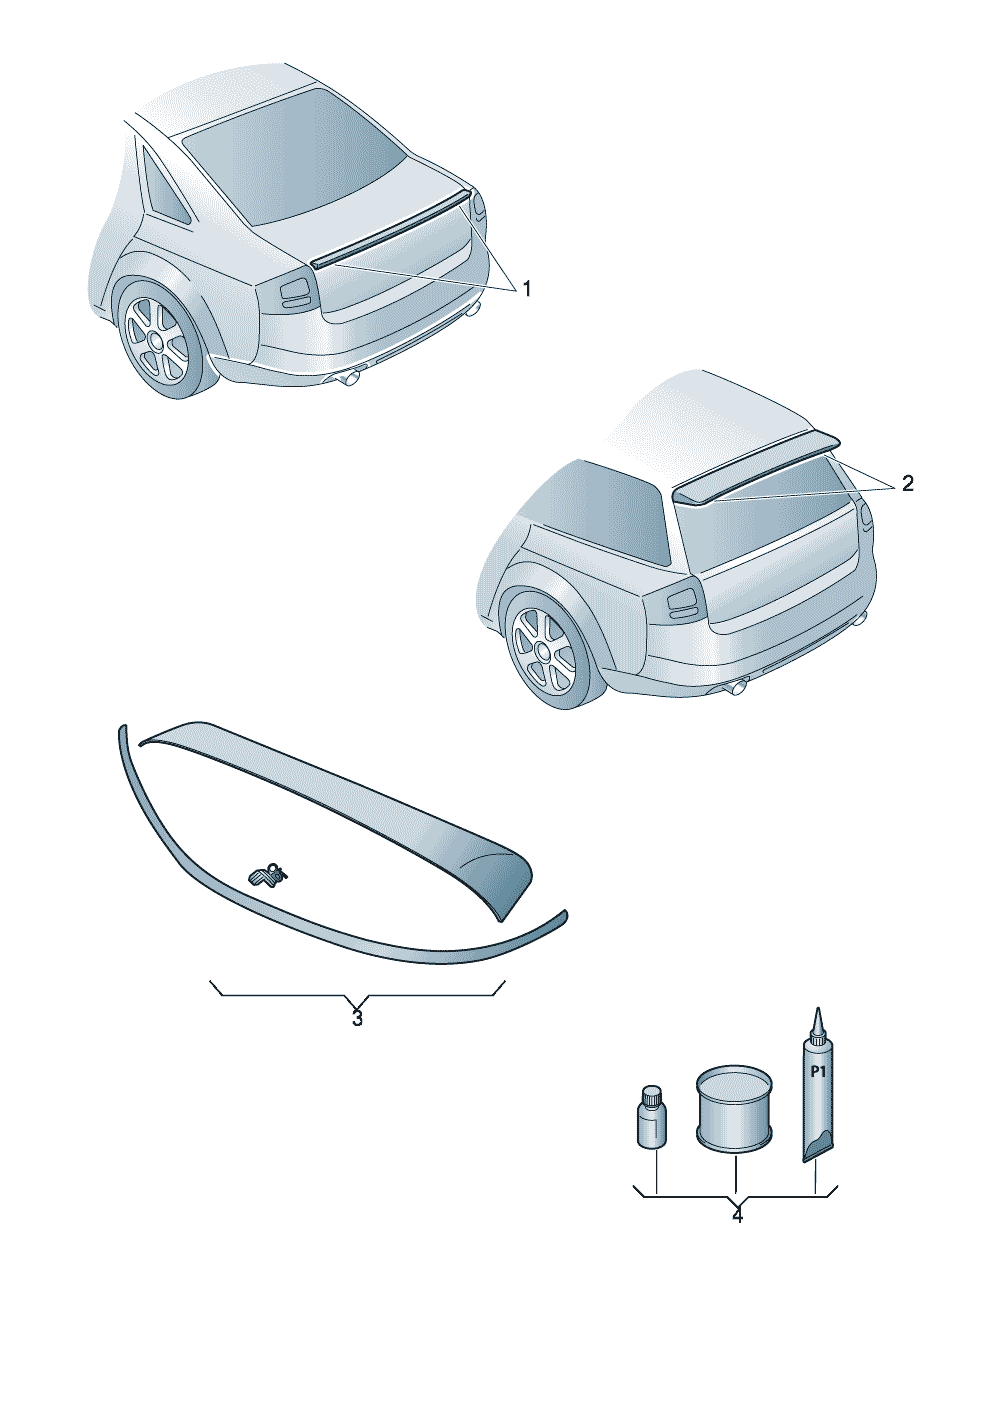 Original ZubehörAerodynamik-Anbauteile<br/>keine FI-Funktion möglich  - Audi A4/Avant - a4